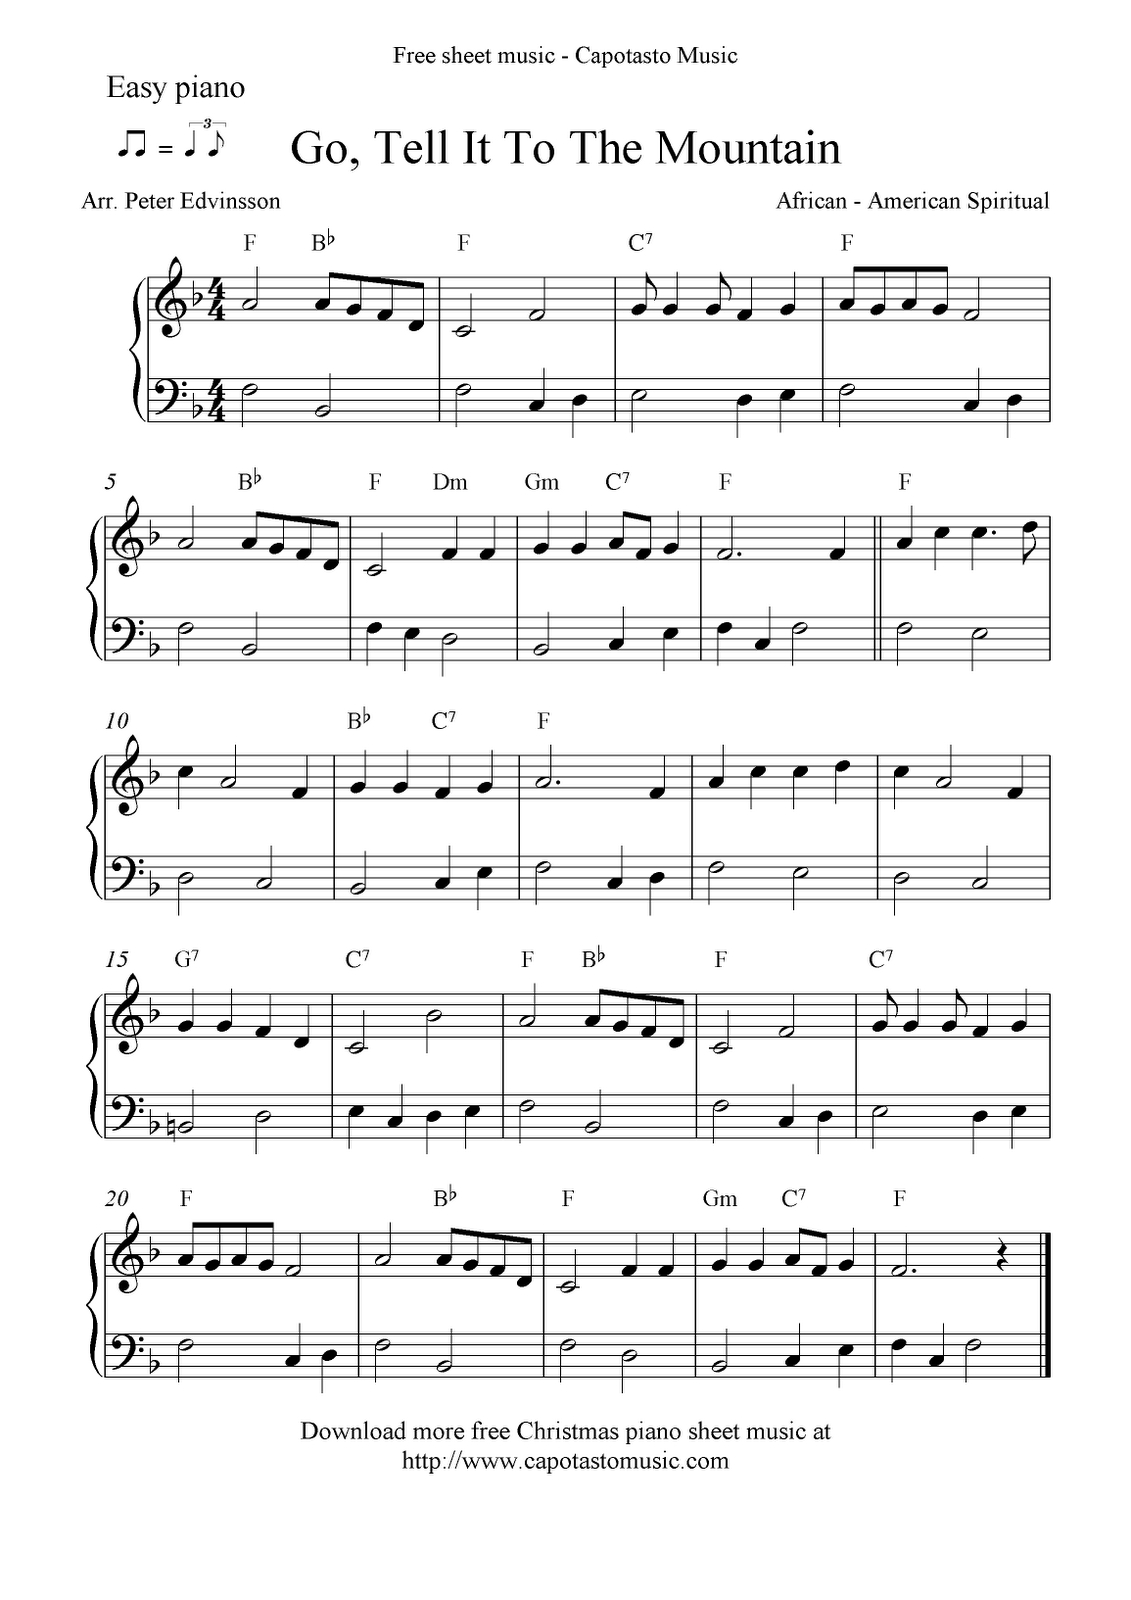 Free Printable Piano Sheet Music | Free Sheet Music Scores: Easy - Free Piano Sheet Music Online Printable Popular Songs